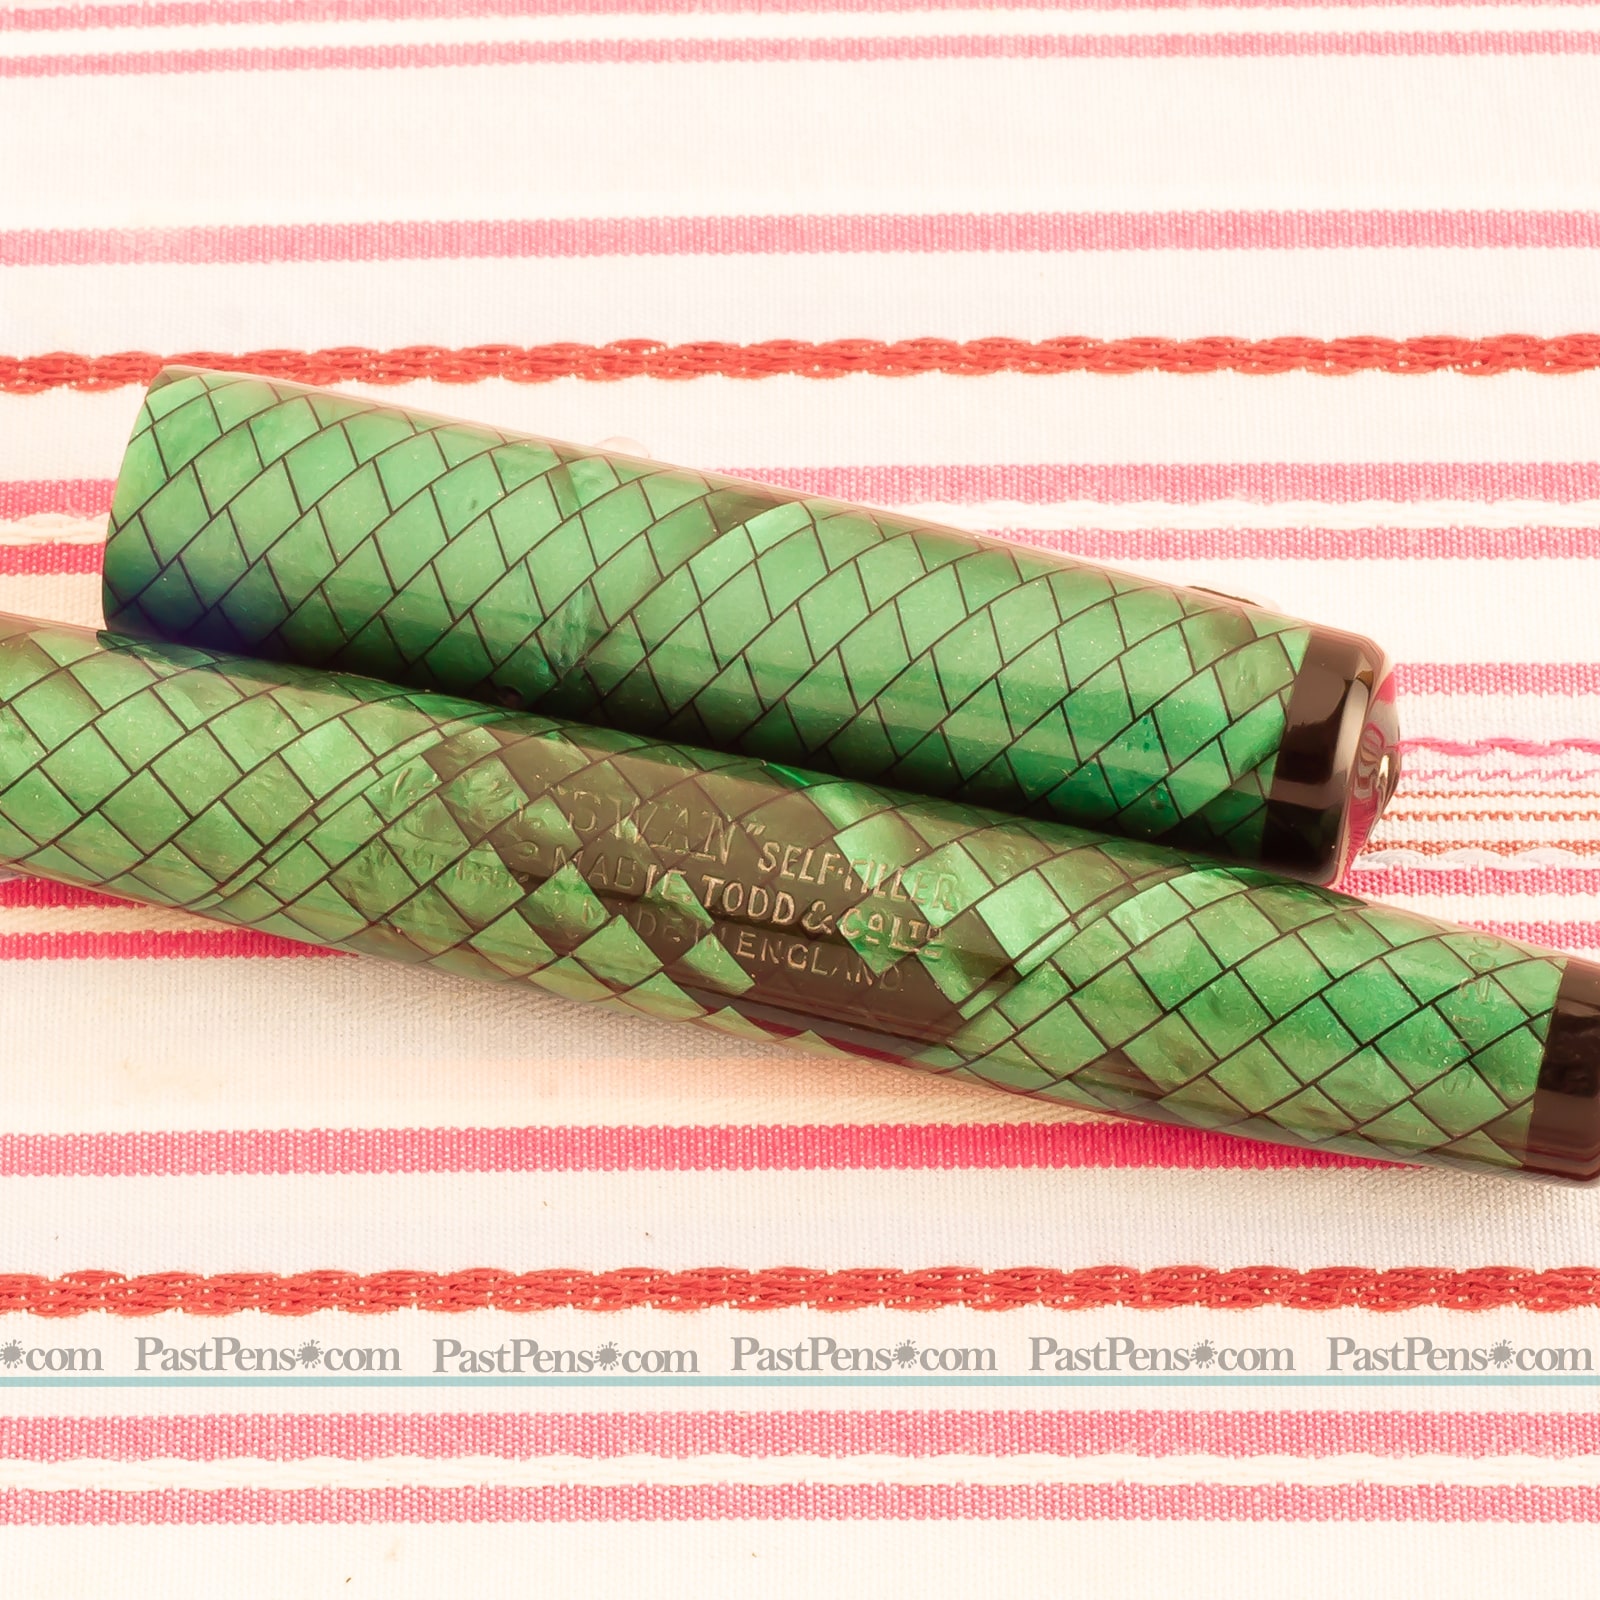 mabie todd swan self filler snakeskin lizard green fountain pen